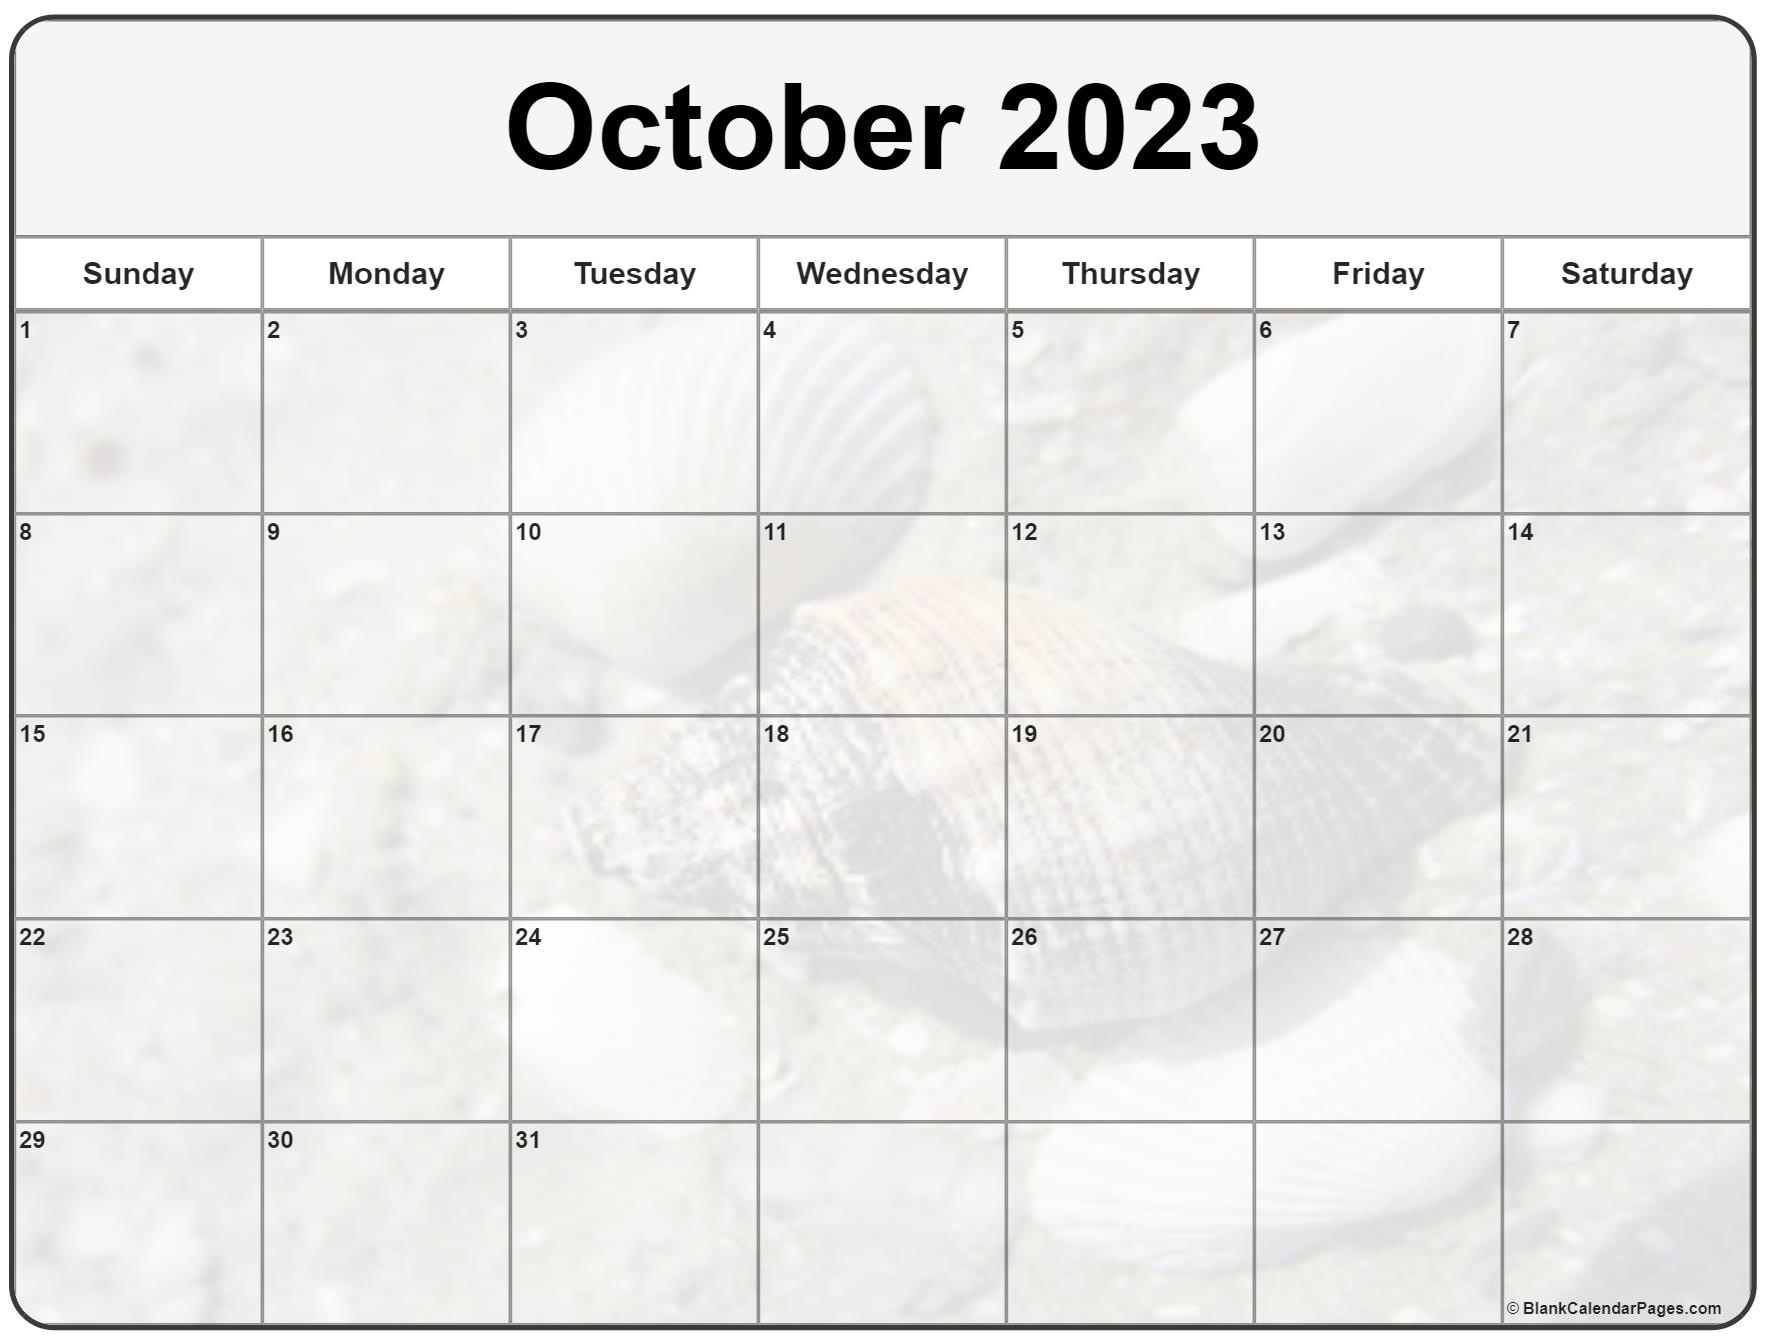 free-october-2023-calendar-pdf-18kb-1-page-s